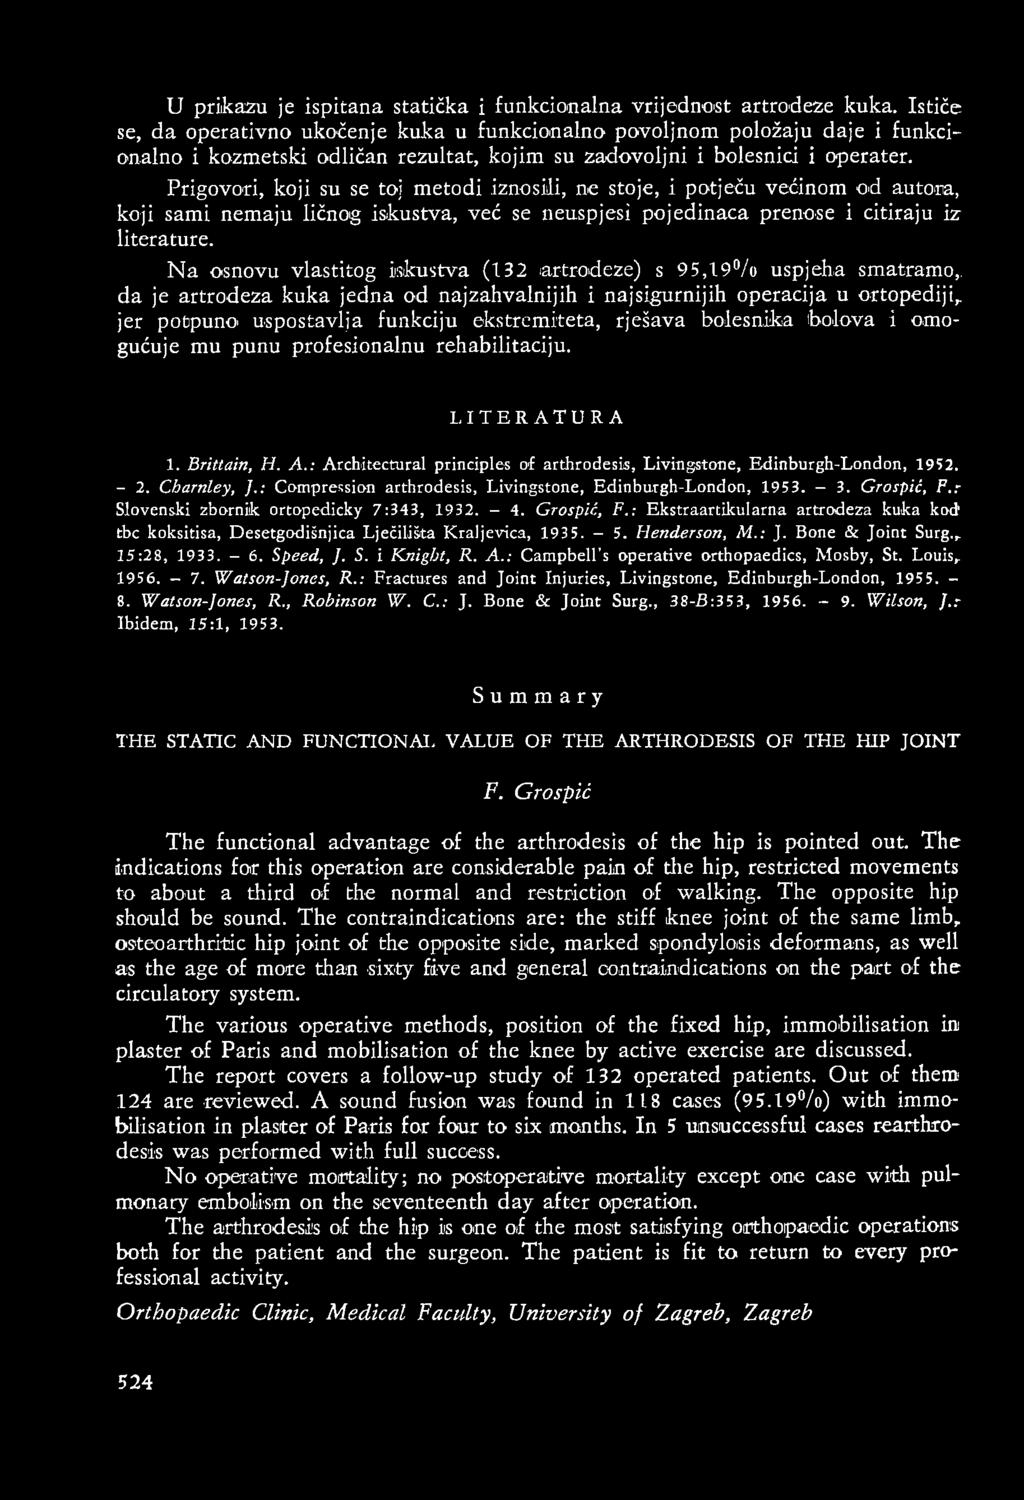 ekstremiteta, rješava bolesnika bolova i om o gućuje mu punu profesionalnu rehabilitaciju. LITERATURA 1. Brittain, H. A.: Architectural principles of arthrodesis, Livingstone, Edinburgh-London, 1952.